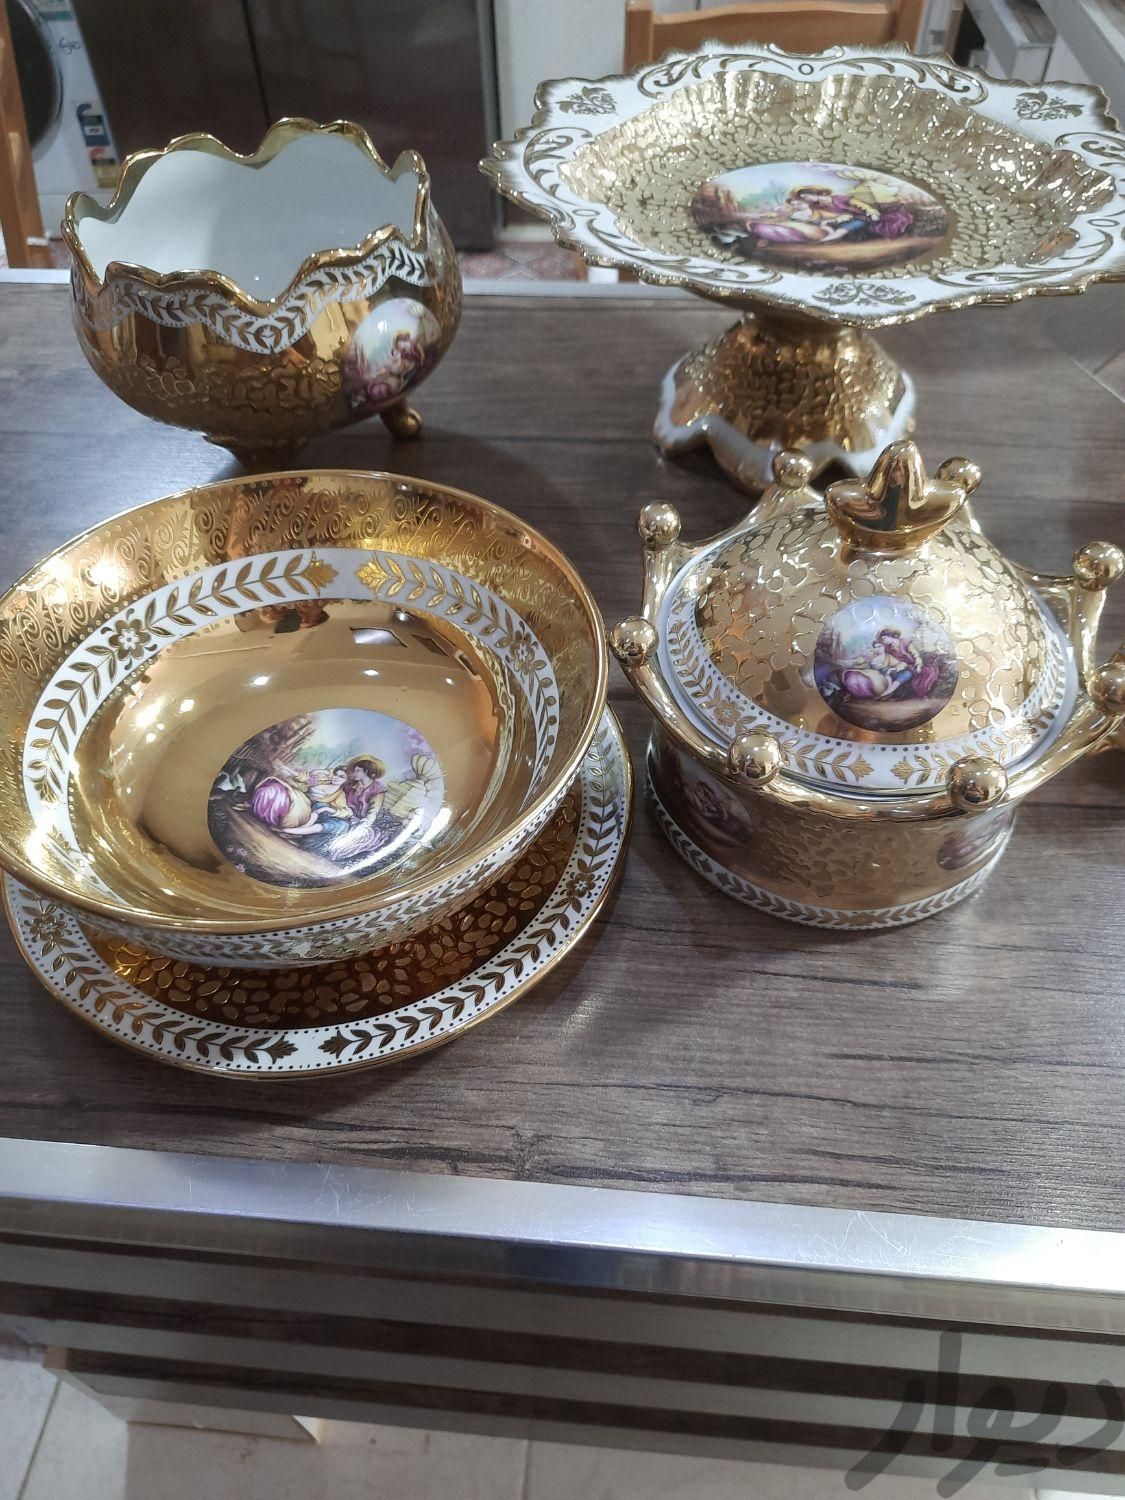 فروش ظروف طلایی چروک آنتیک دکوری لیلی|ظروف سرو و پذیرایی|تهران, تهرانپارس غربی|دیوار